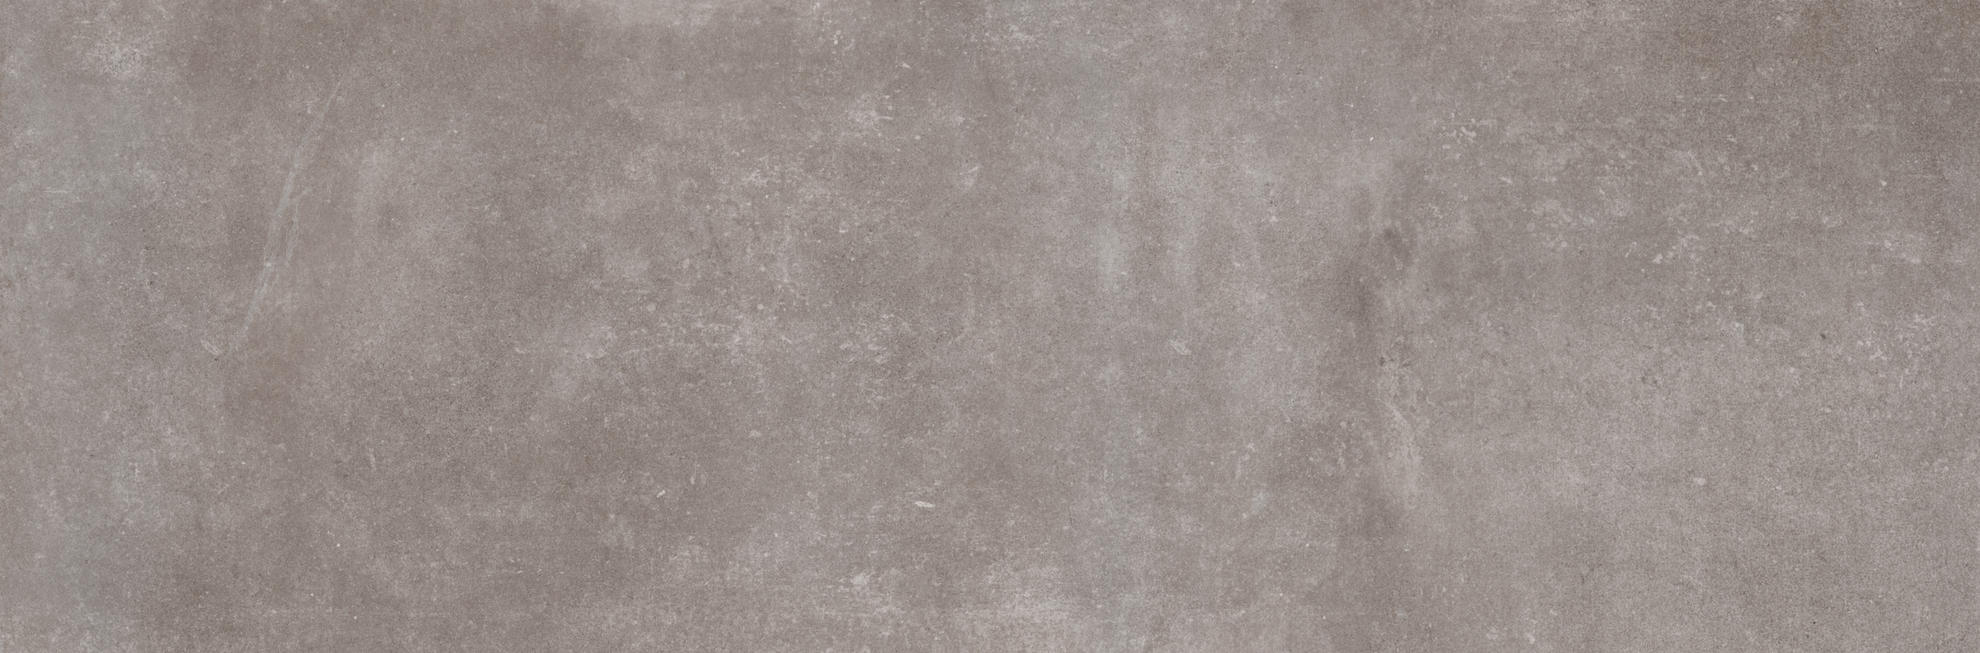 33x100 Studio-Plate Cement Gray Tile Matt